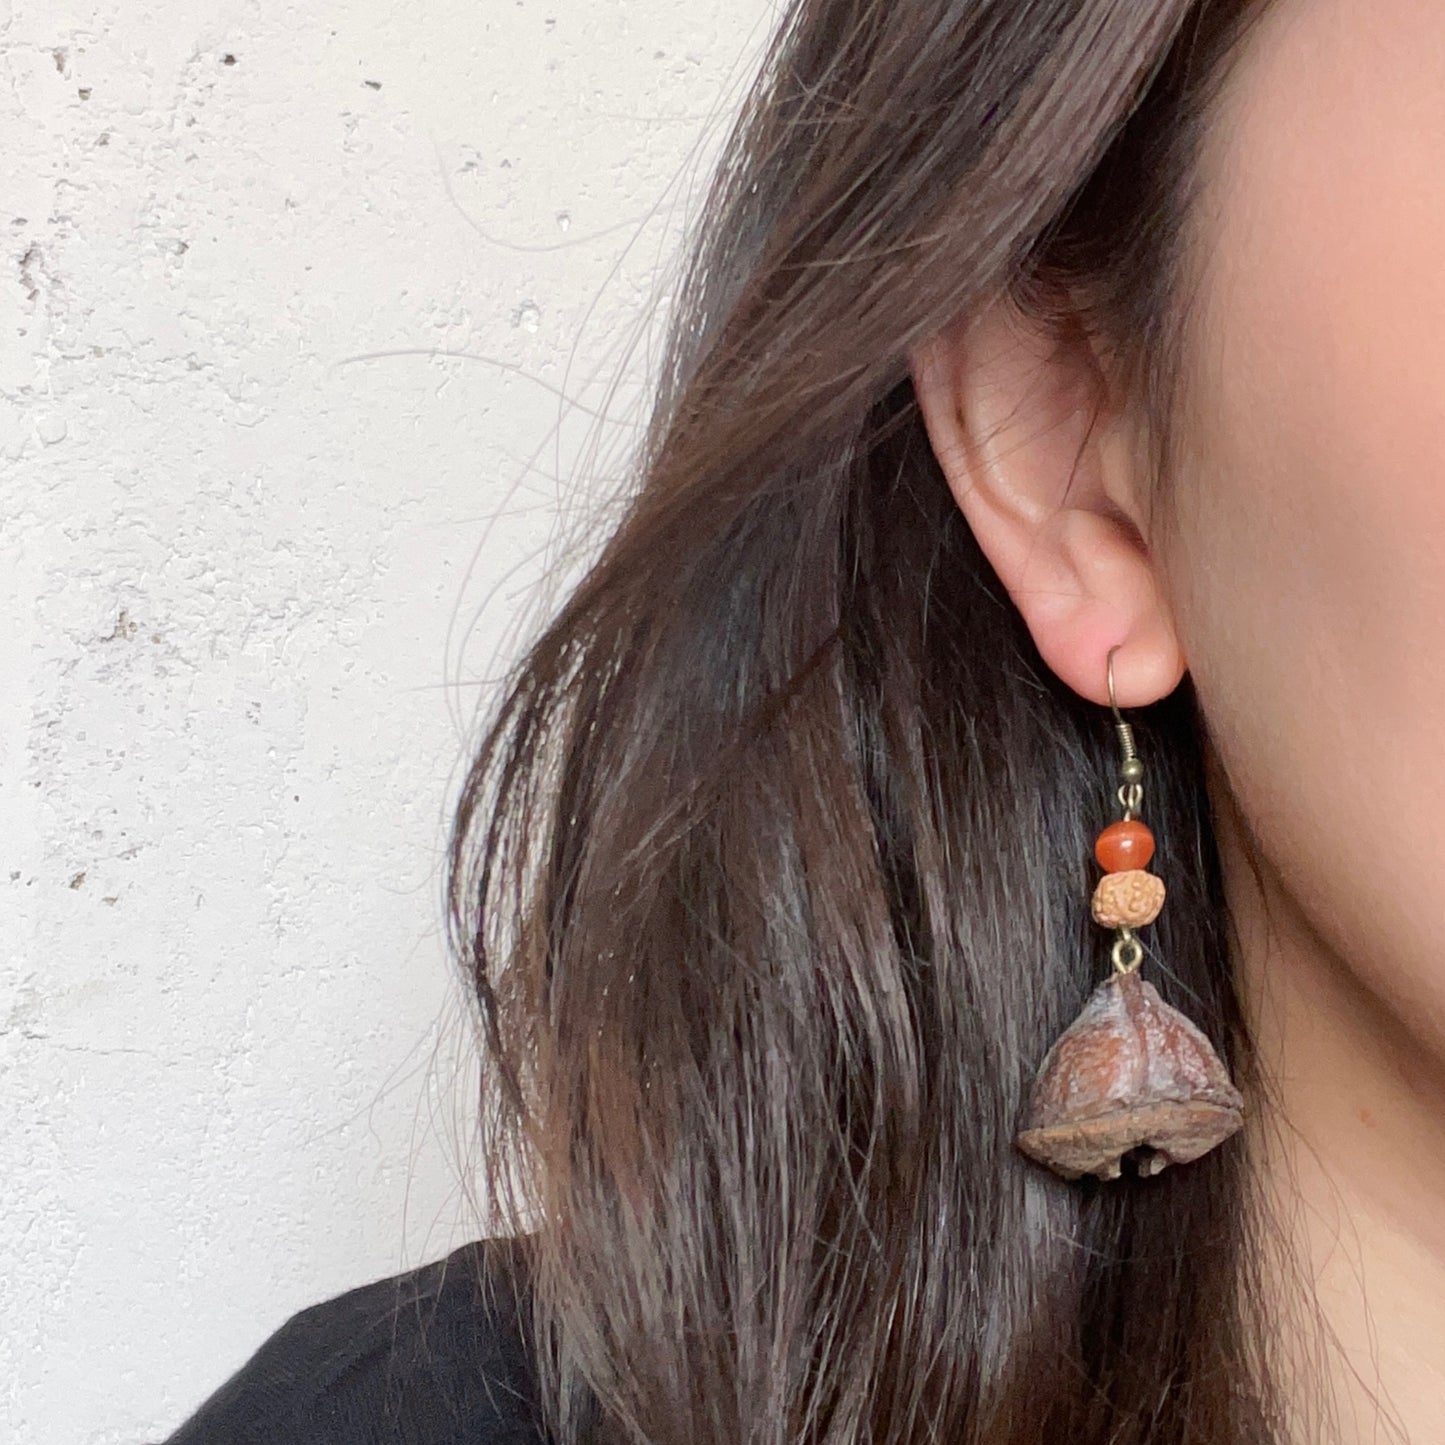 Handmade Asian Style FruitFiesta Earrings - Uplifting Eucalyptus